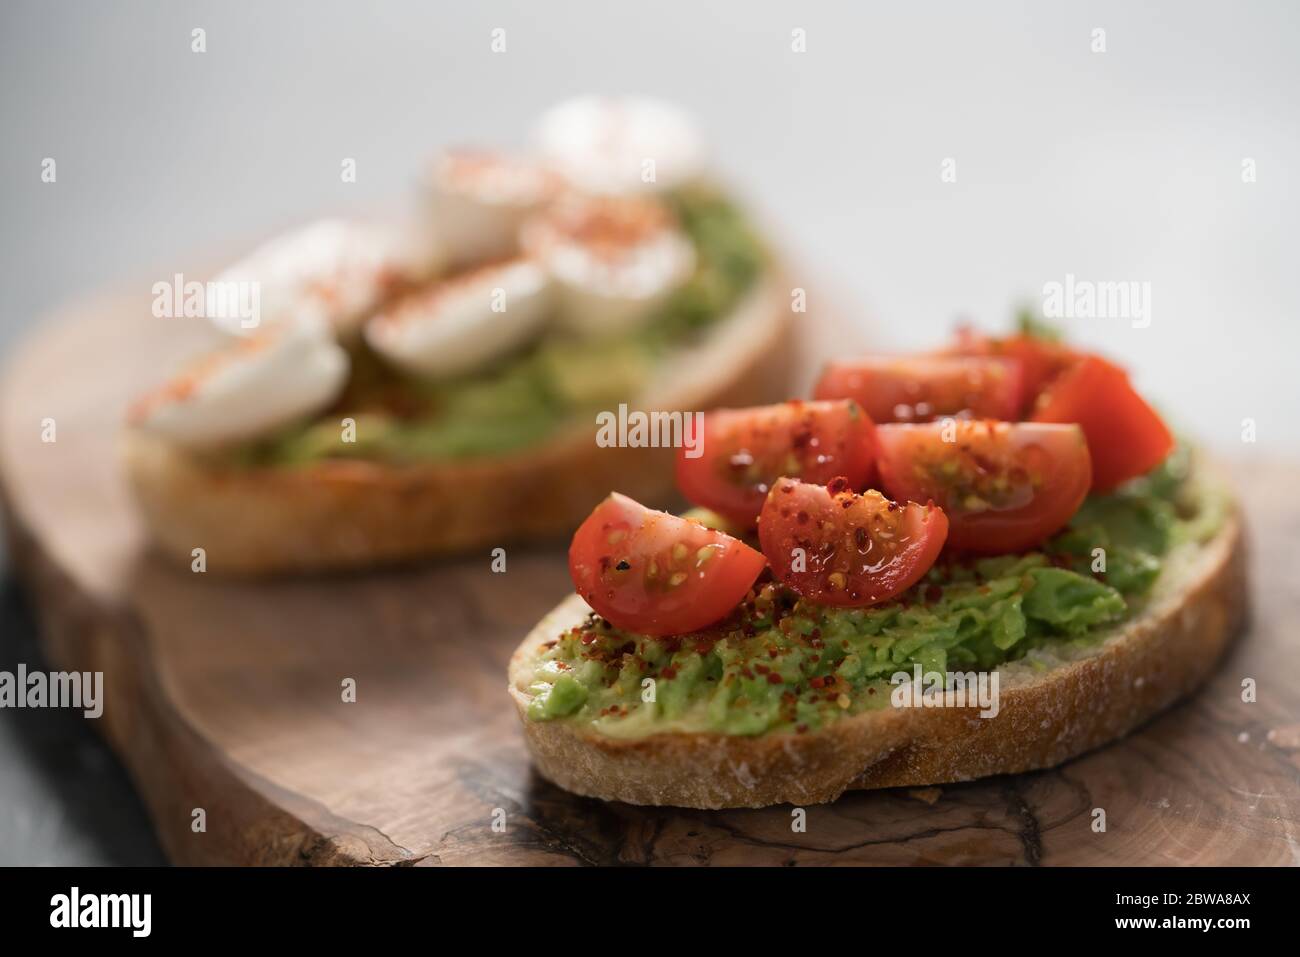 Bruschettas with avocado, tomato and mozzarella on wood board on concrete bacground Stock Photo